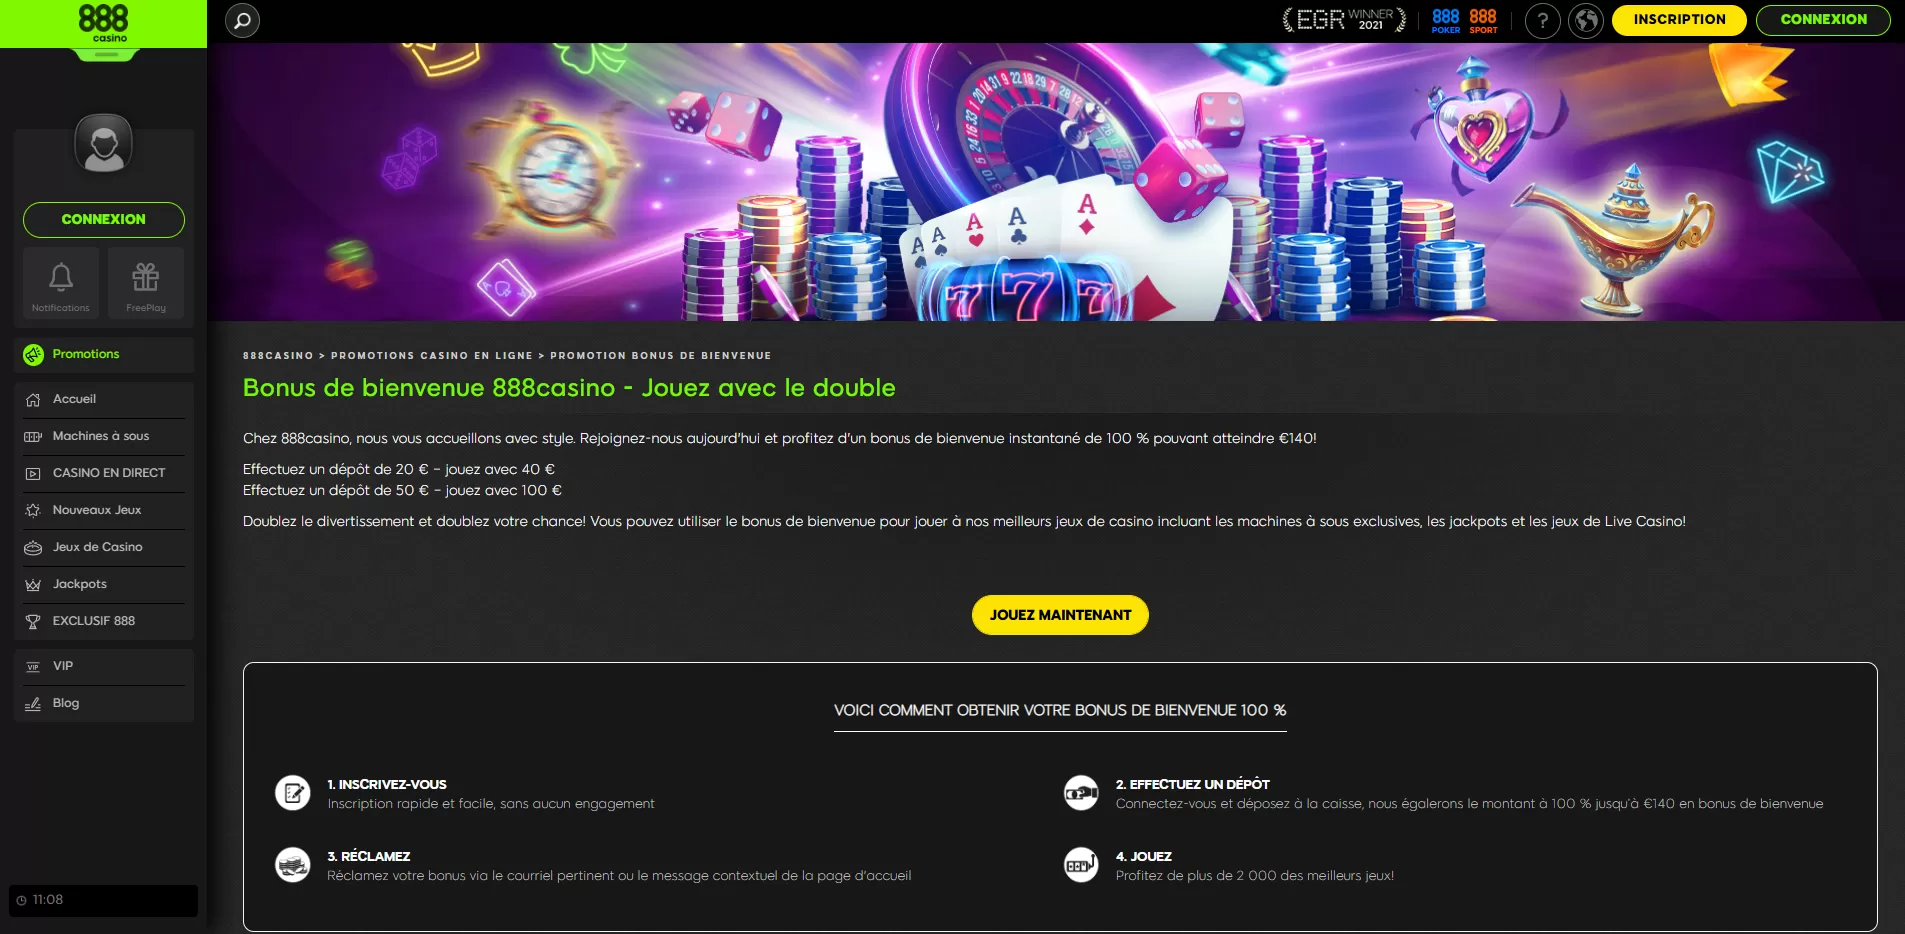 888 casino bonus de bienvenue